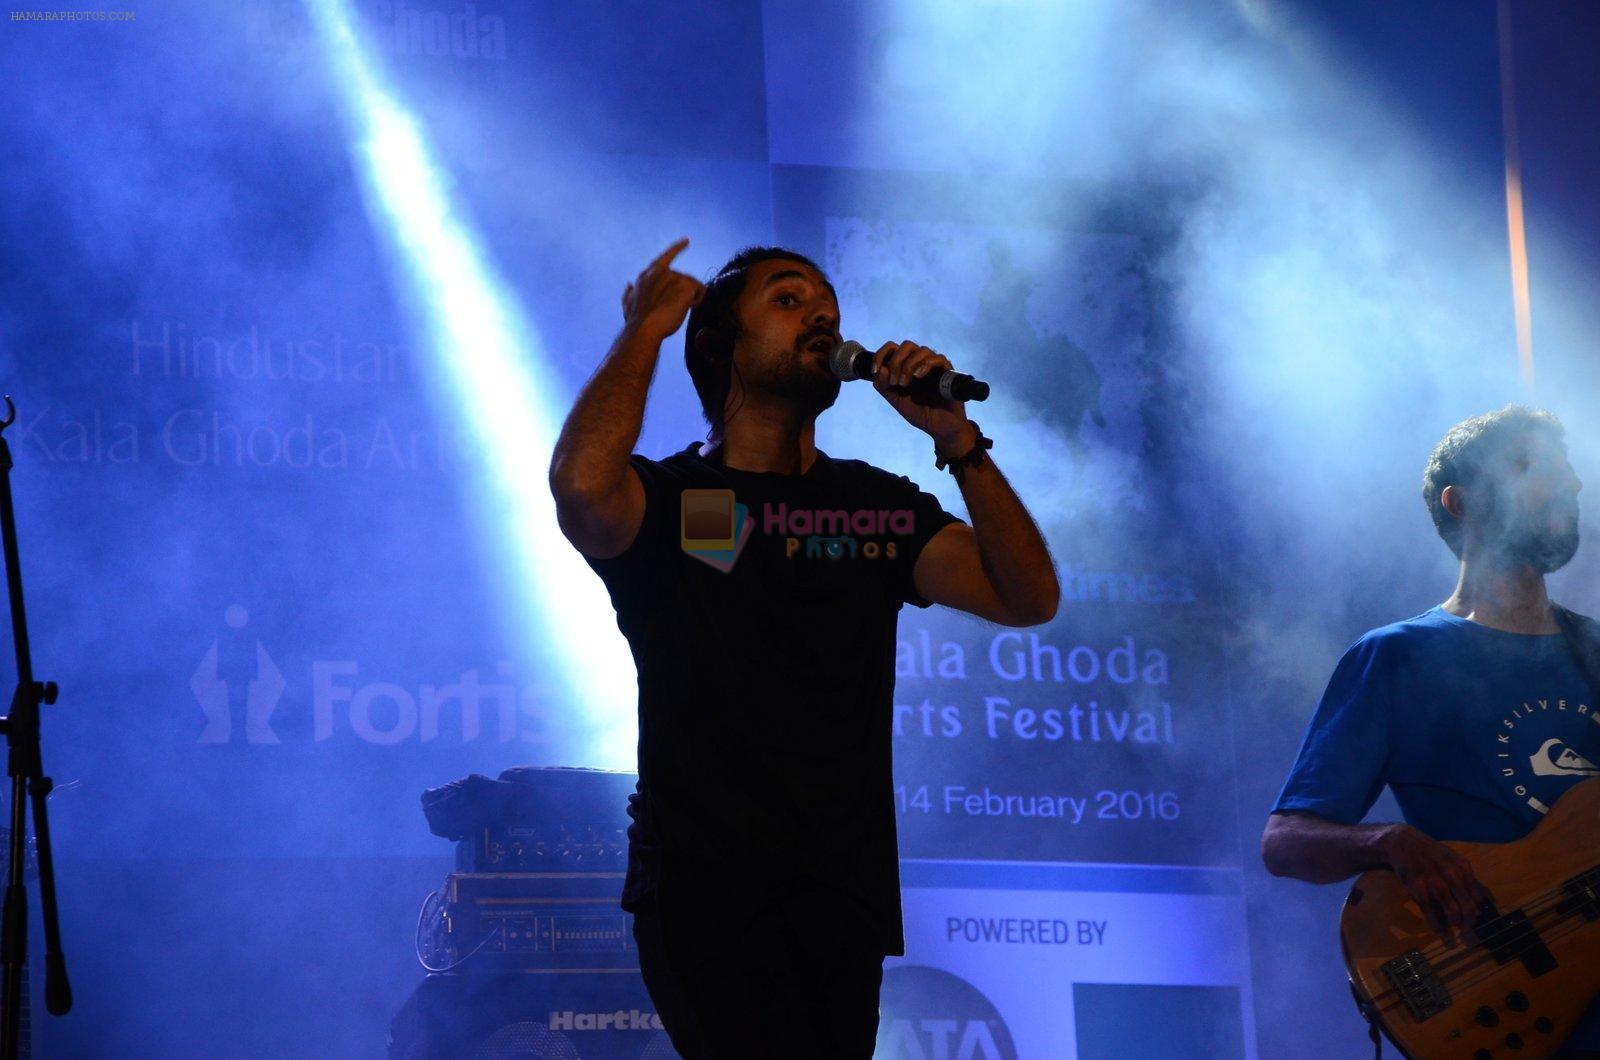 Vir Das performs for Pepe Jeans music festin Kalaghoda on 13th Feb 2016